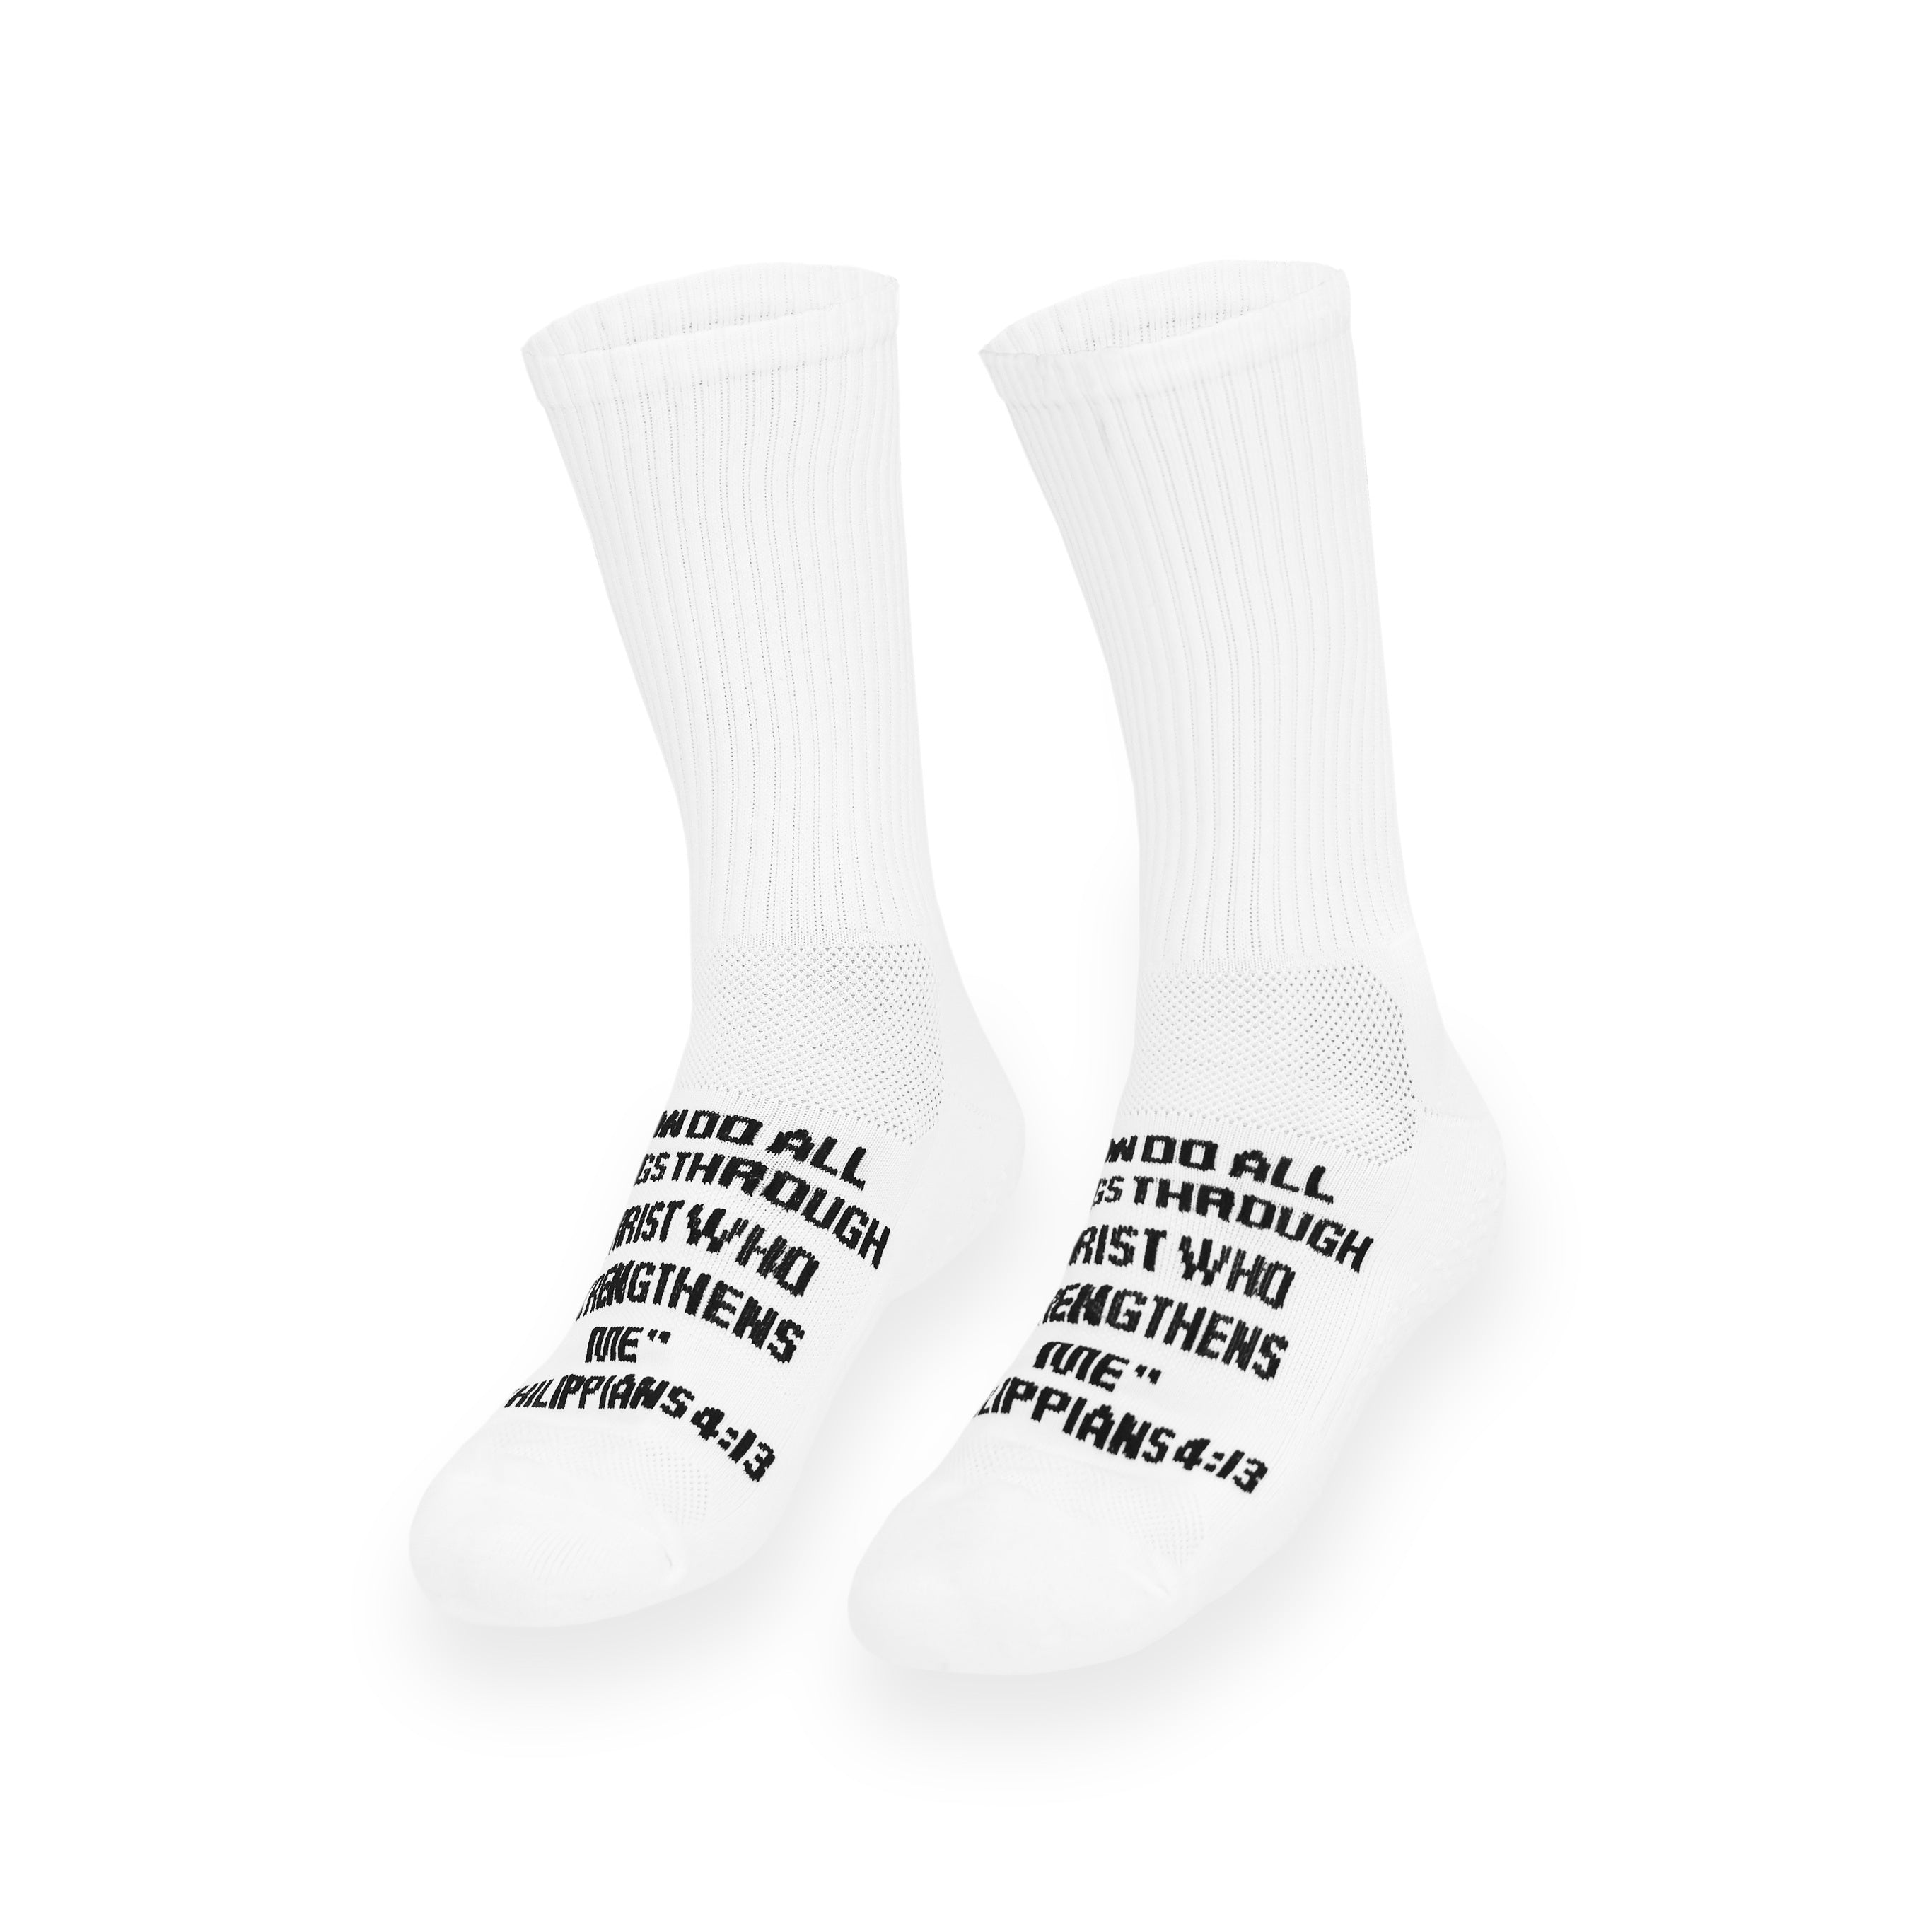 BALLR Premium Grip Socks